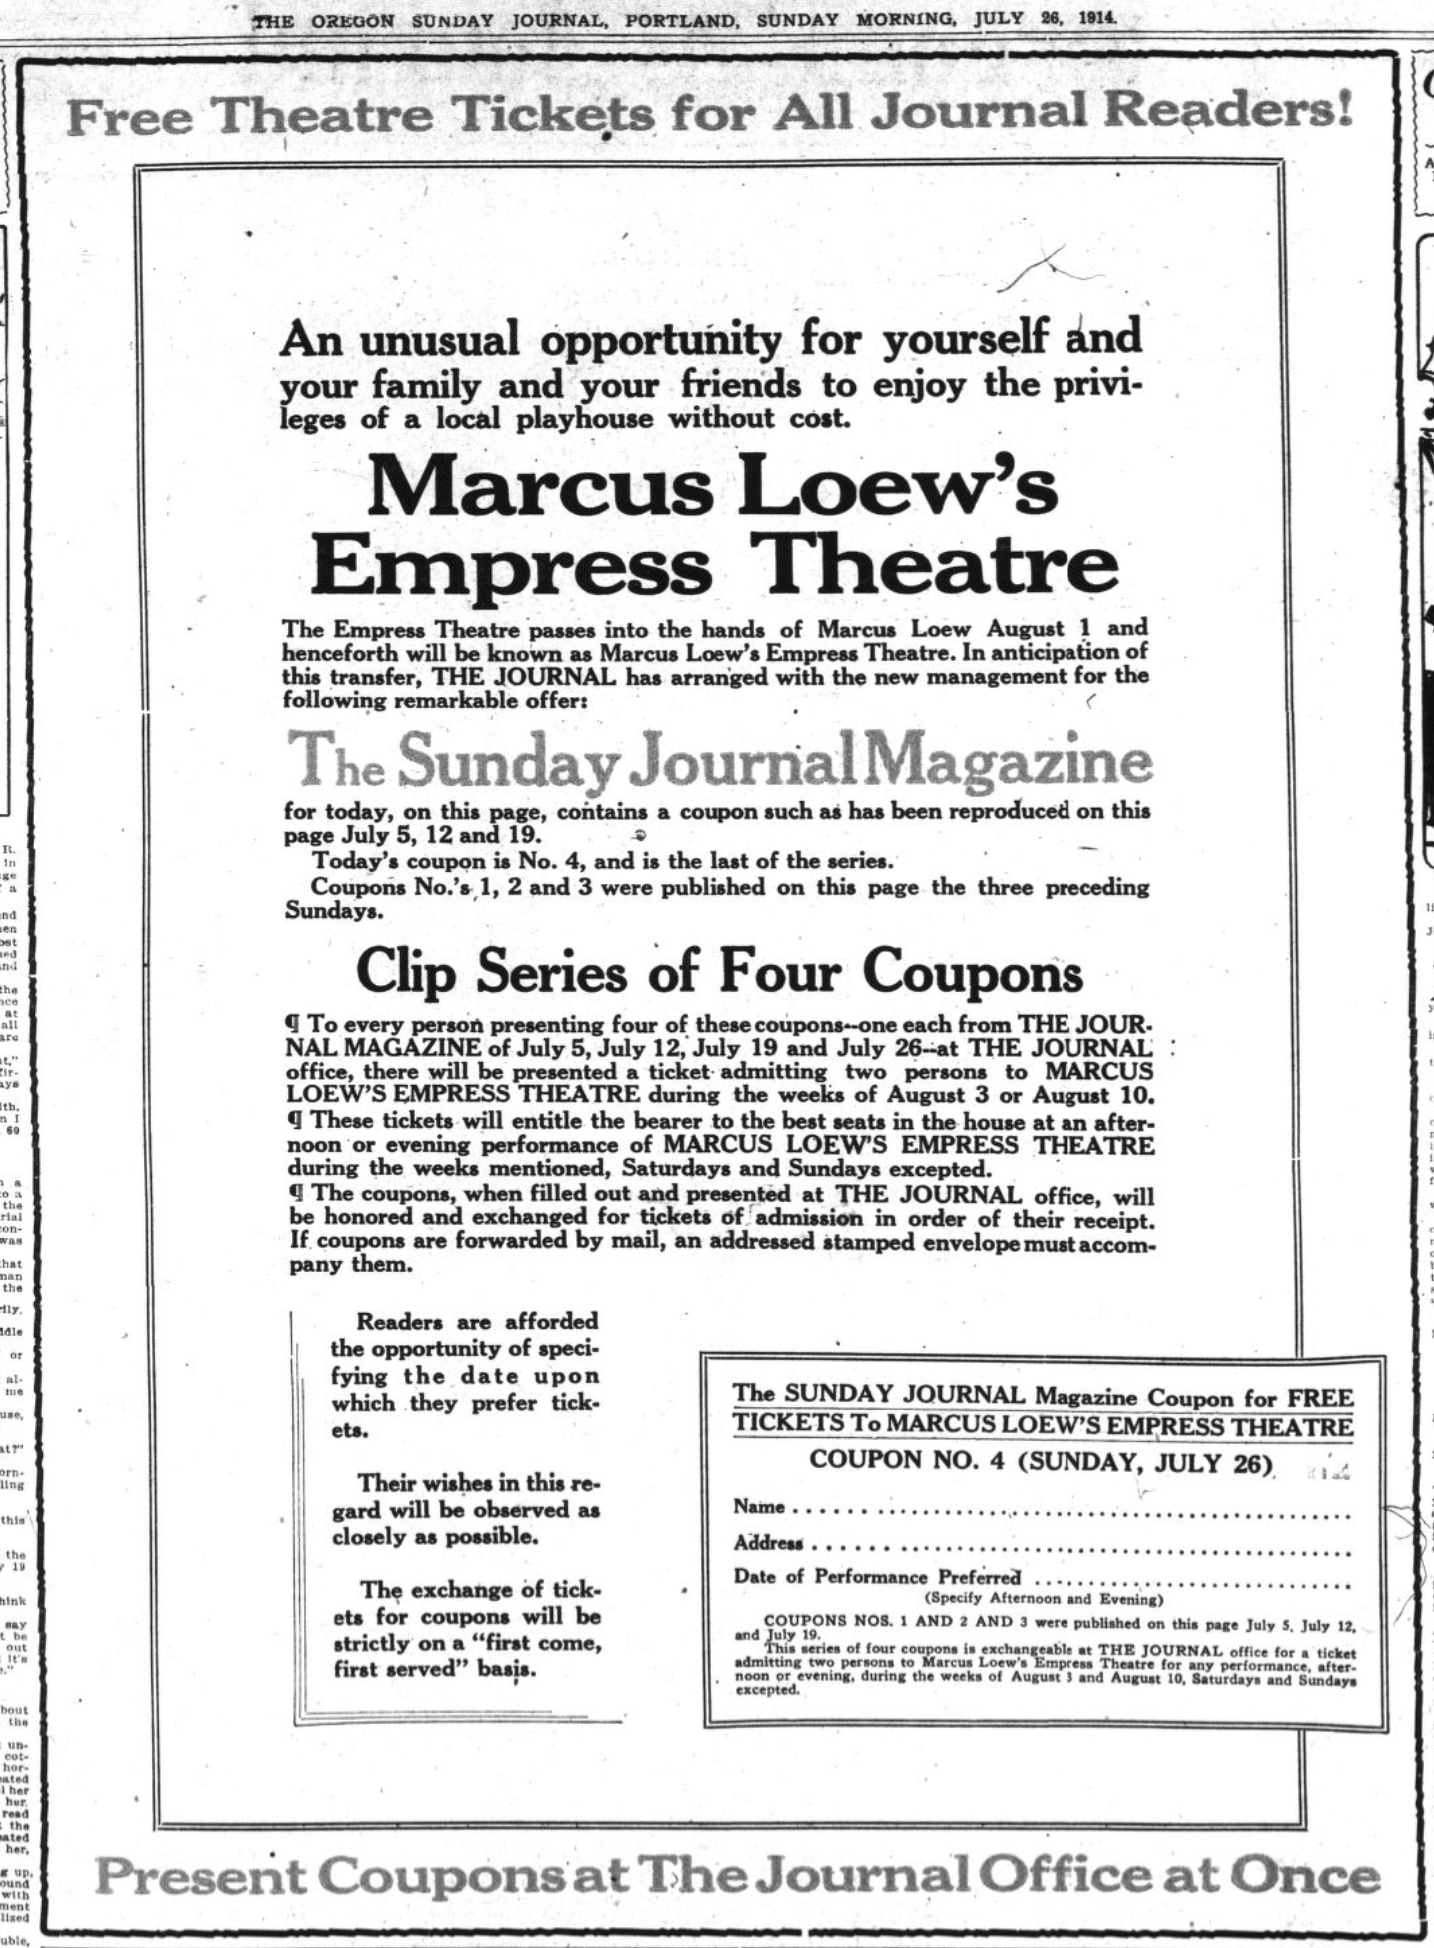 Loew's Notice, The Oregon Sunday Journal (1914)